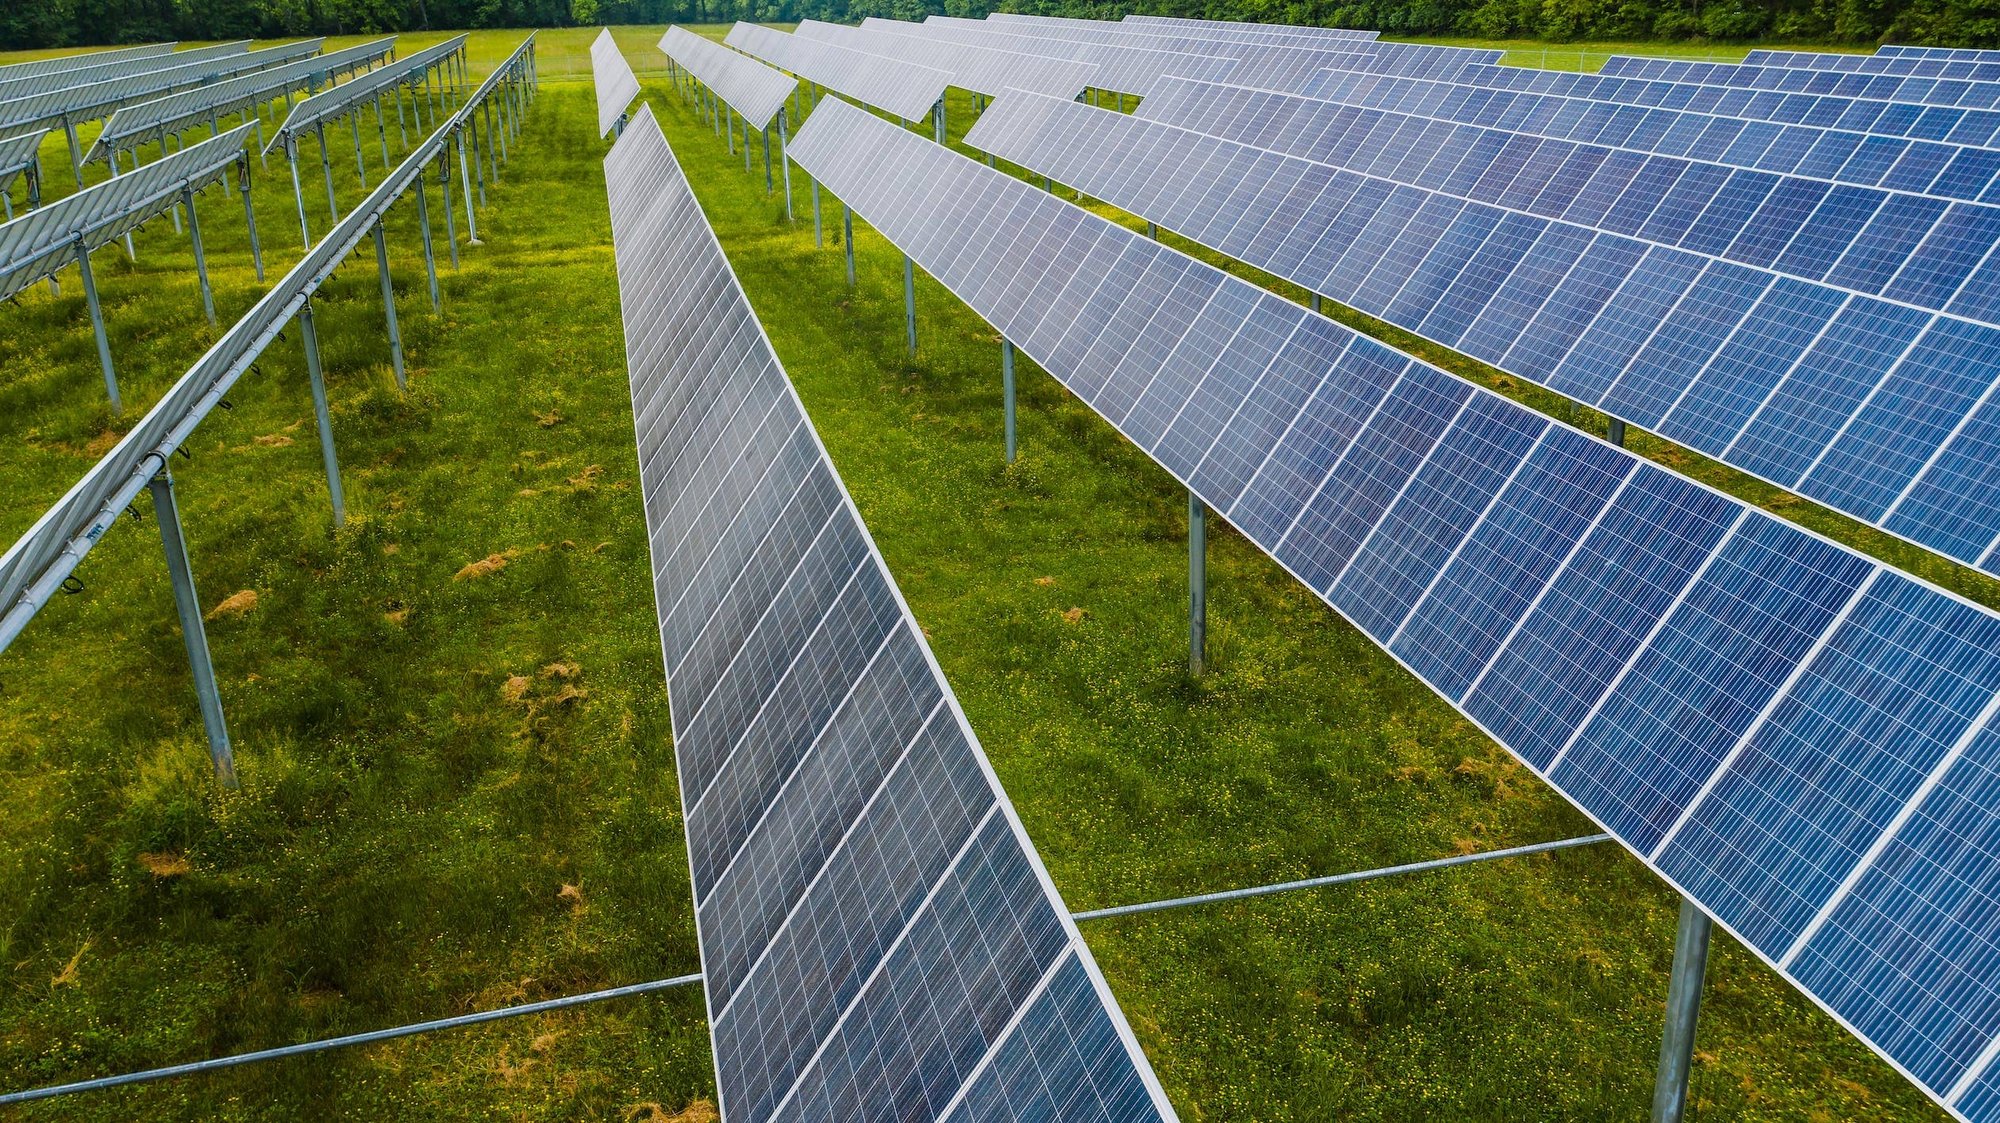 Solar panels and renewable energy